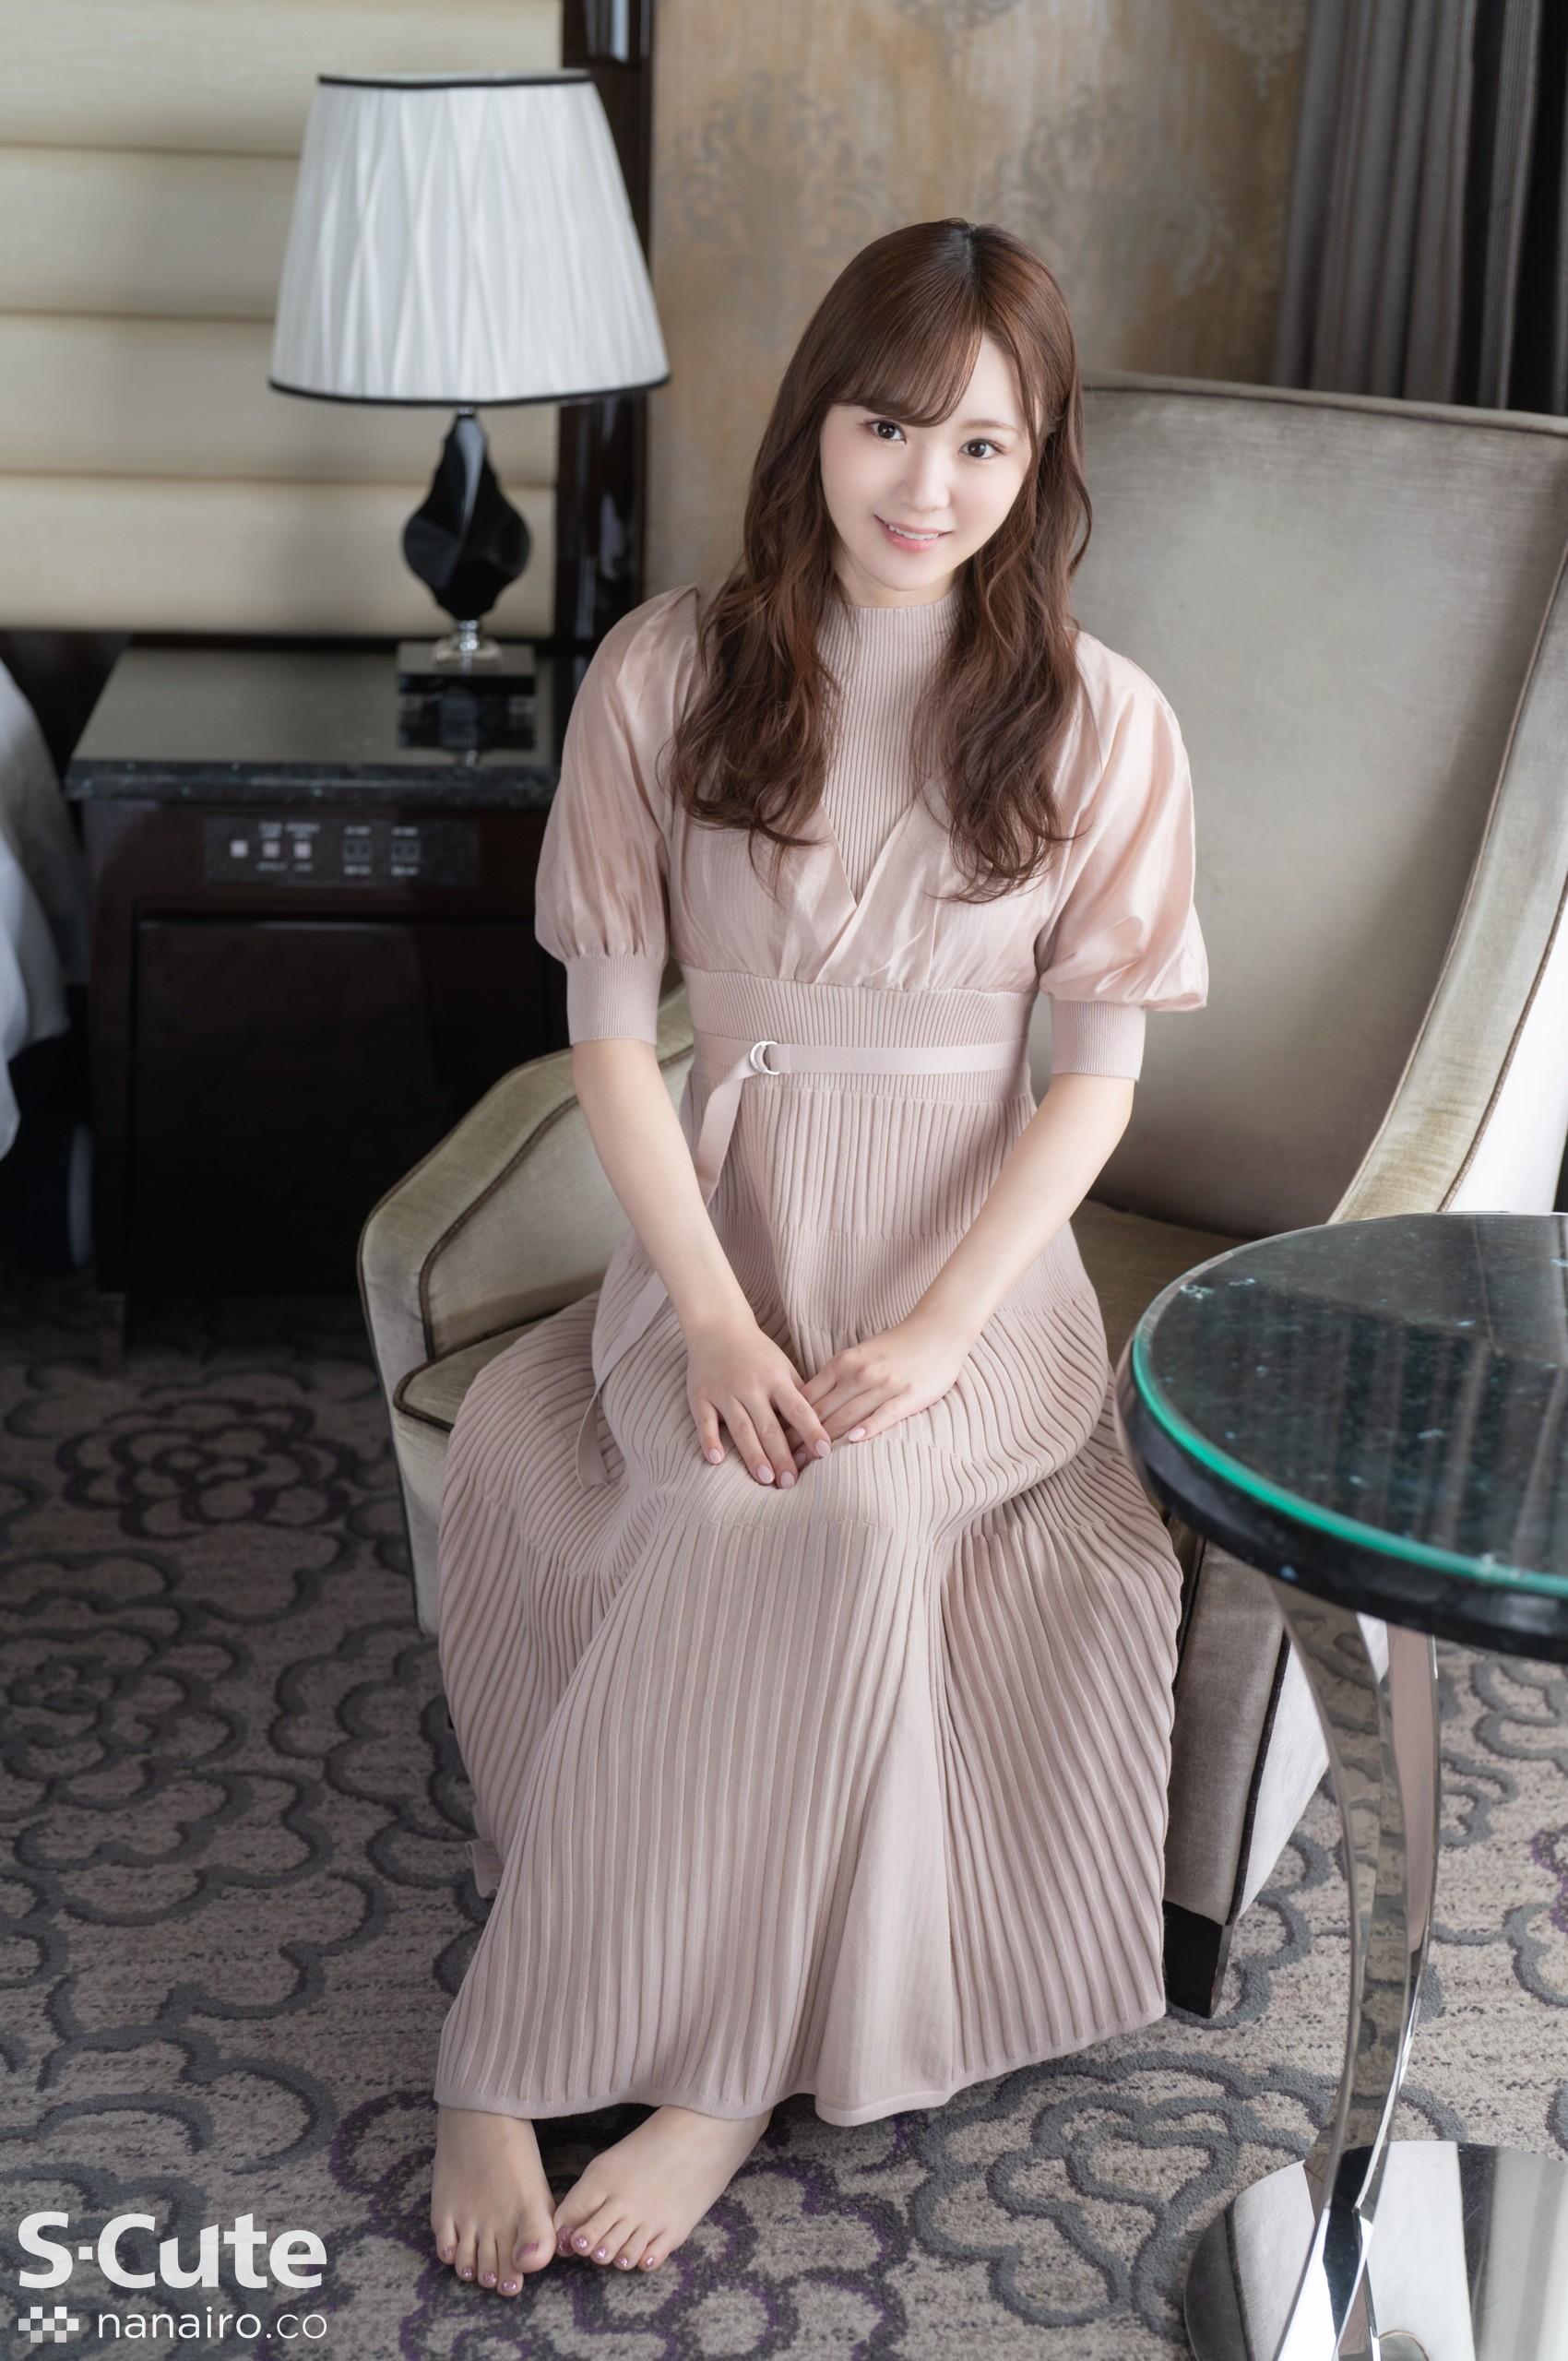 S-Cute ueh_002 جونزو في موعد مع فتاة جميلة عادلة من الدرجة S / Nono